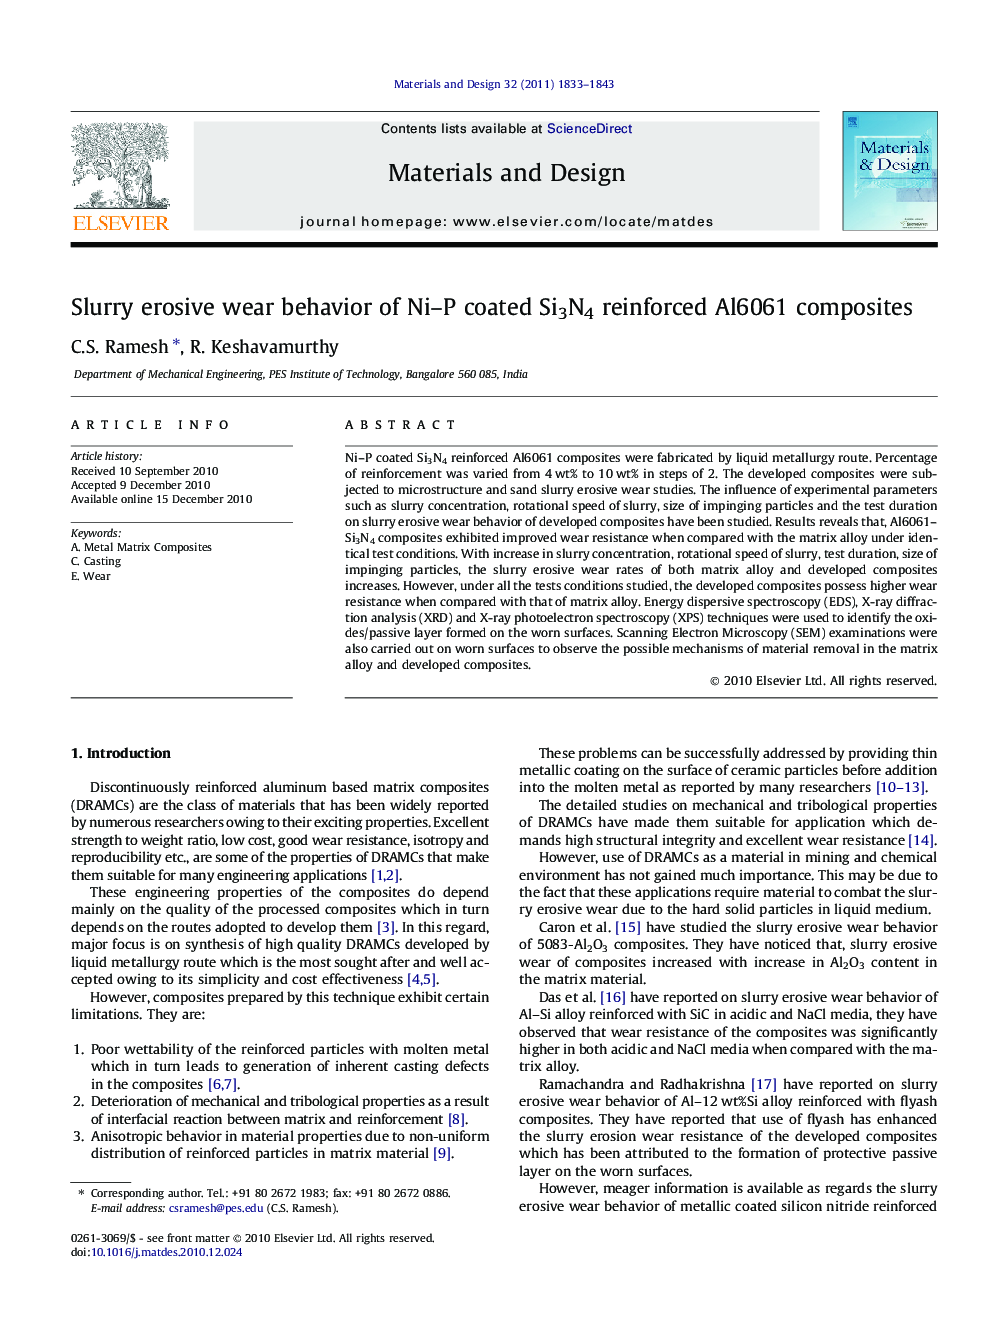 Slurry erosive wear behavior of Ni-P coated Si3N4 reinforced Al6061 composites